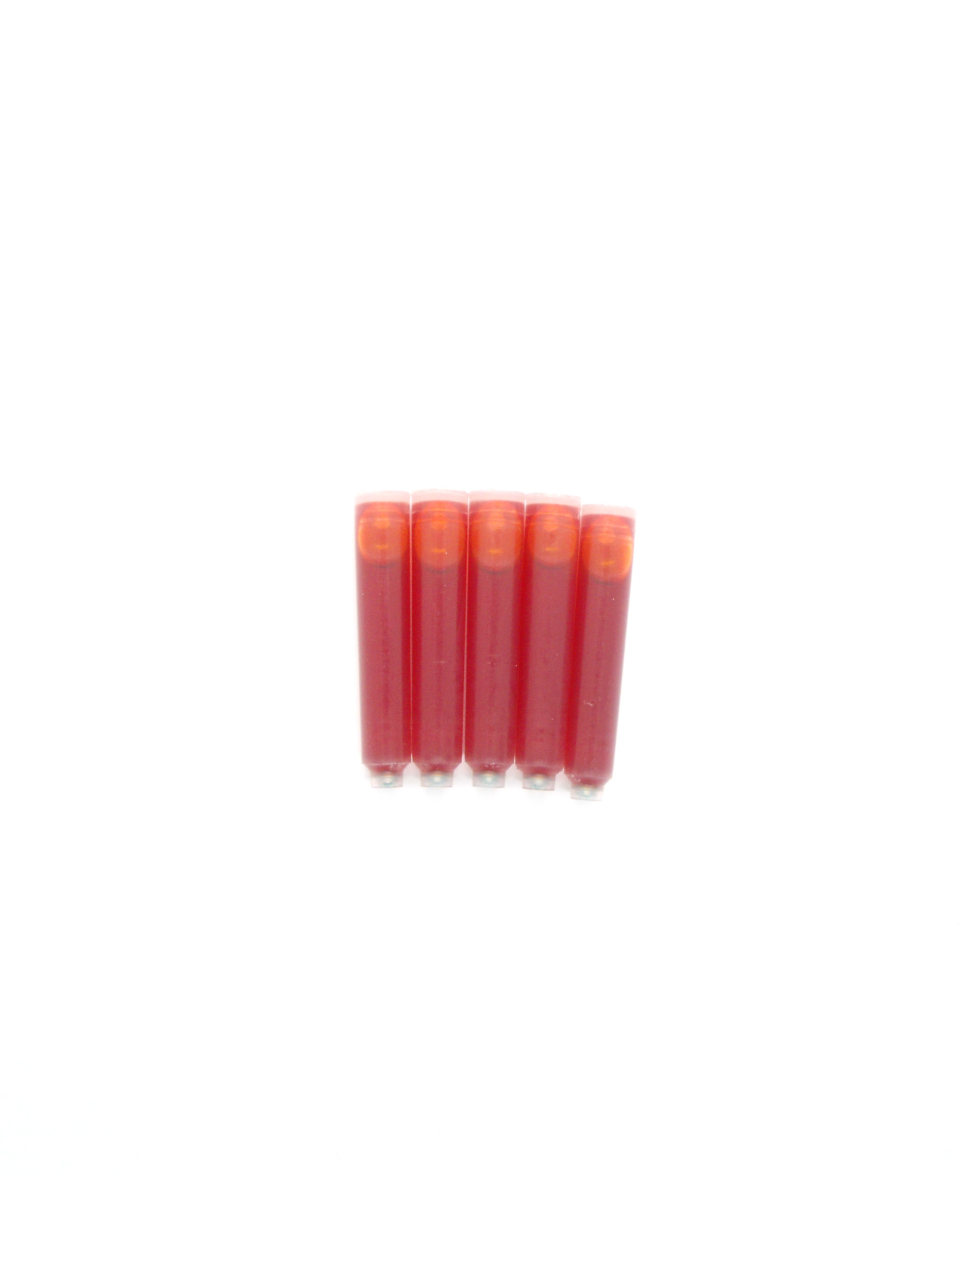 PenConverter Ink Cartridges For Luoshi Fountain Pens (Orange)